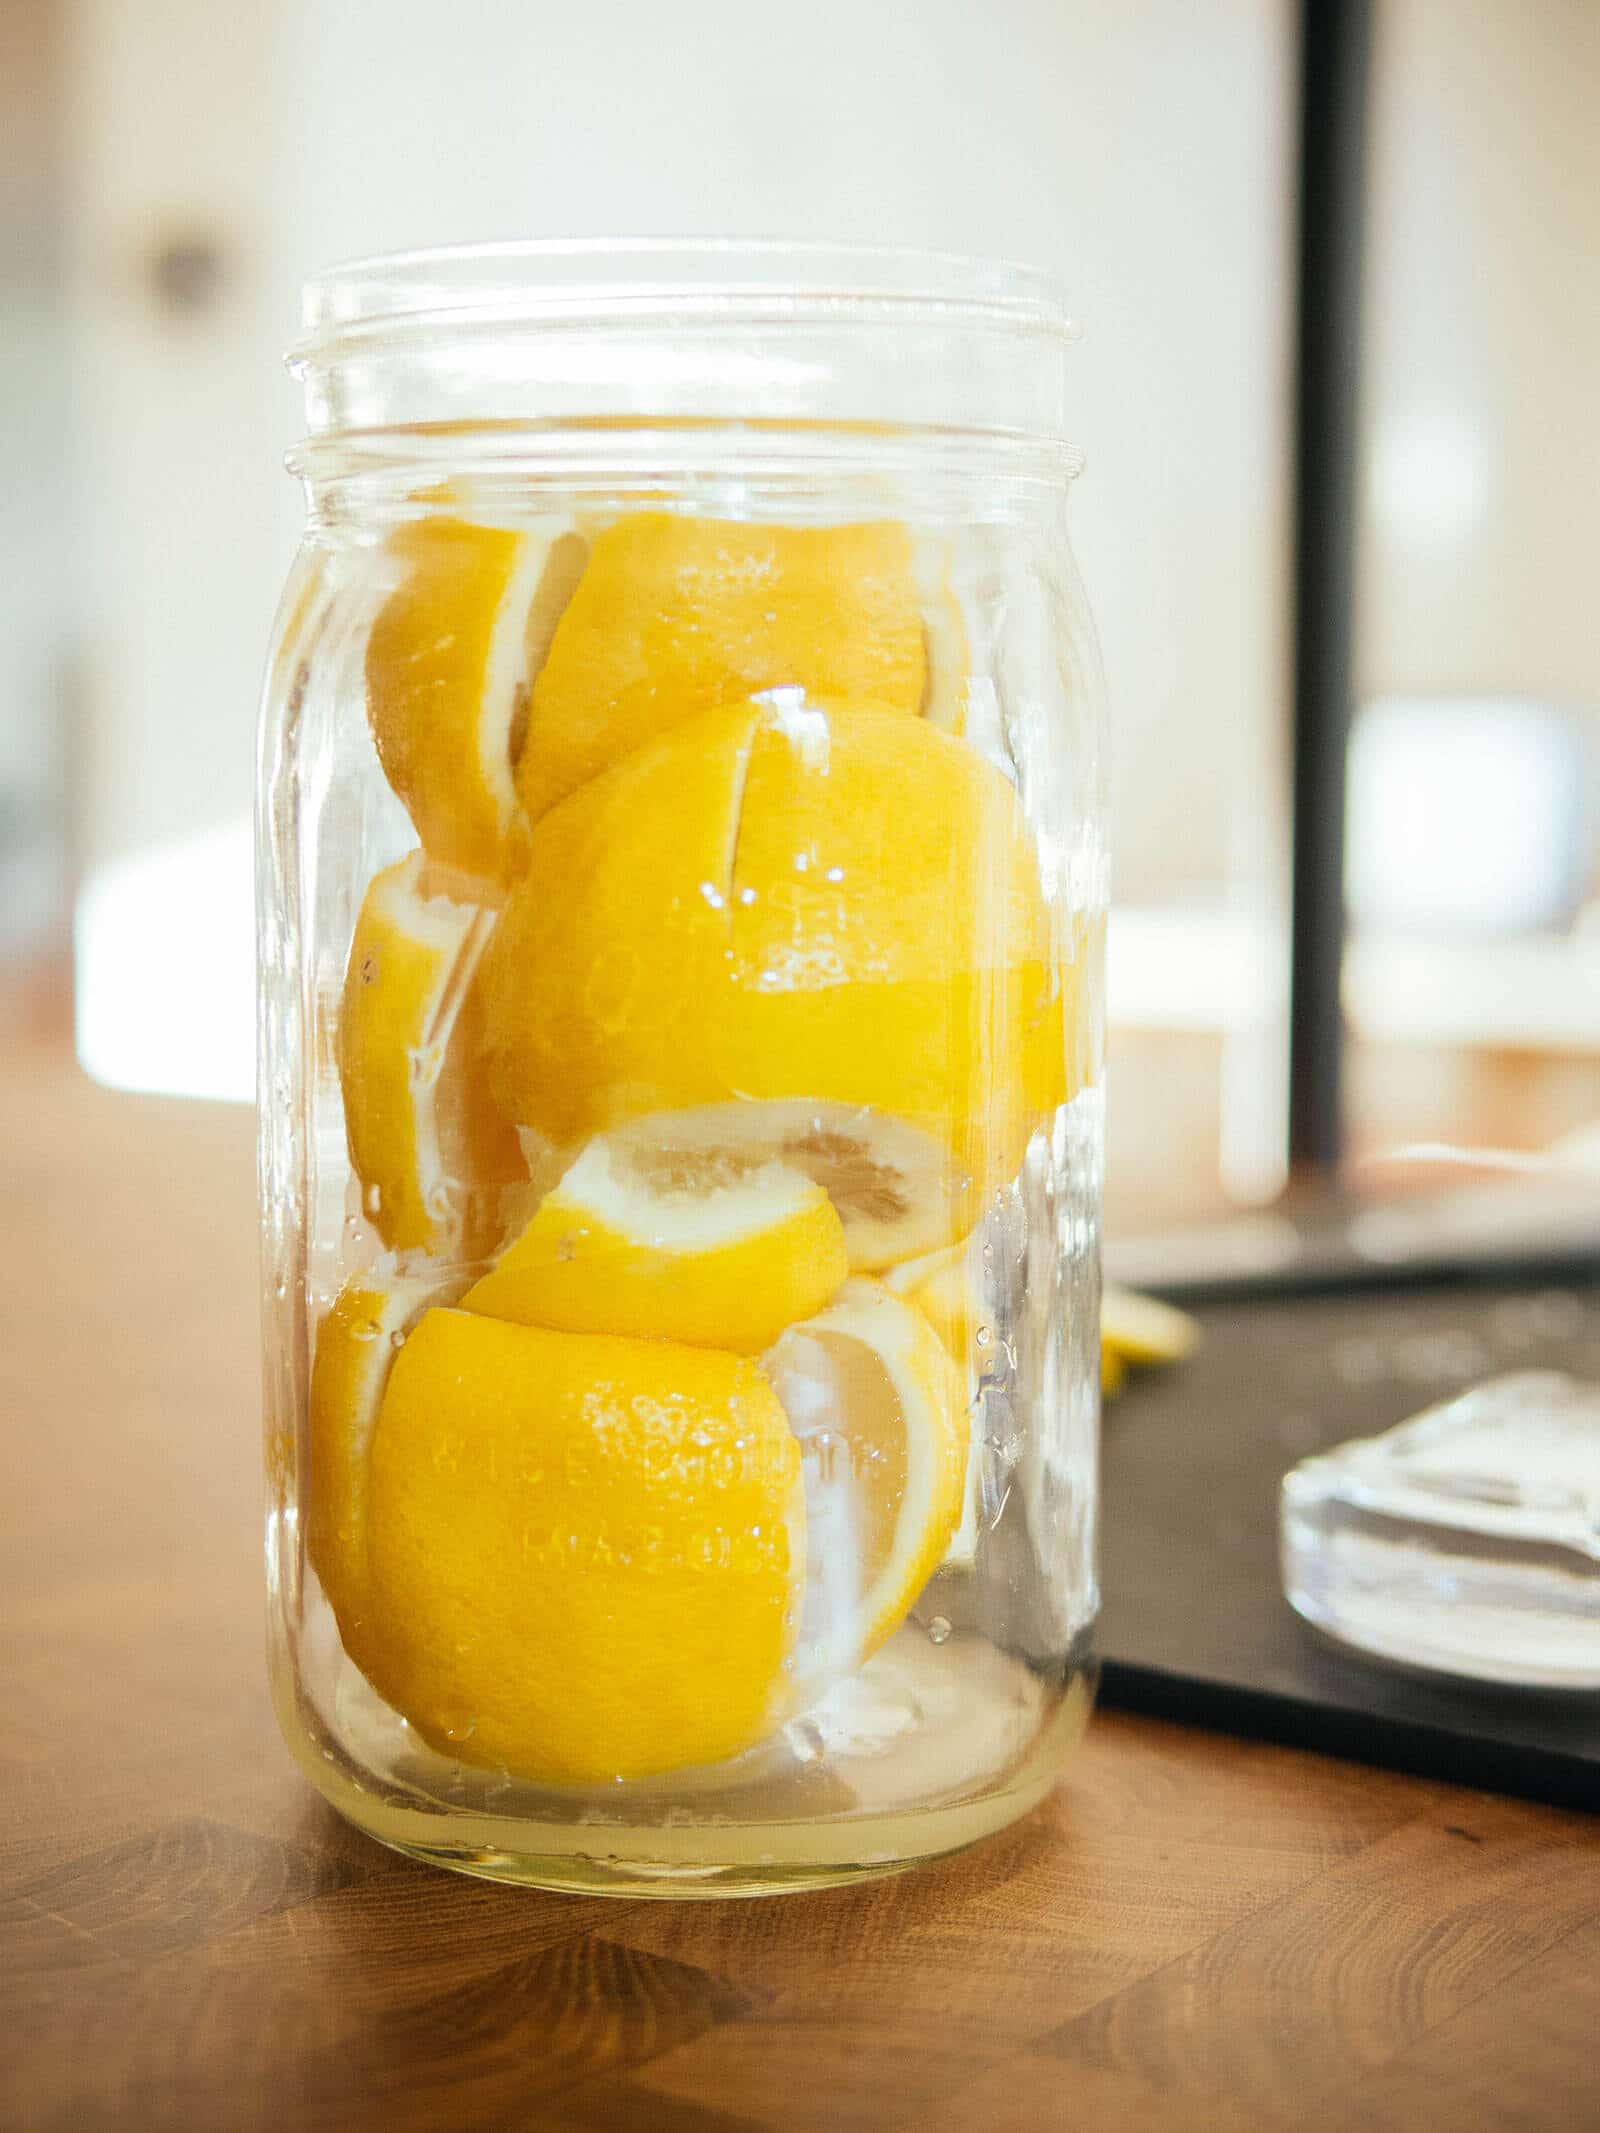 Salted lemons packed into an empty mason jar